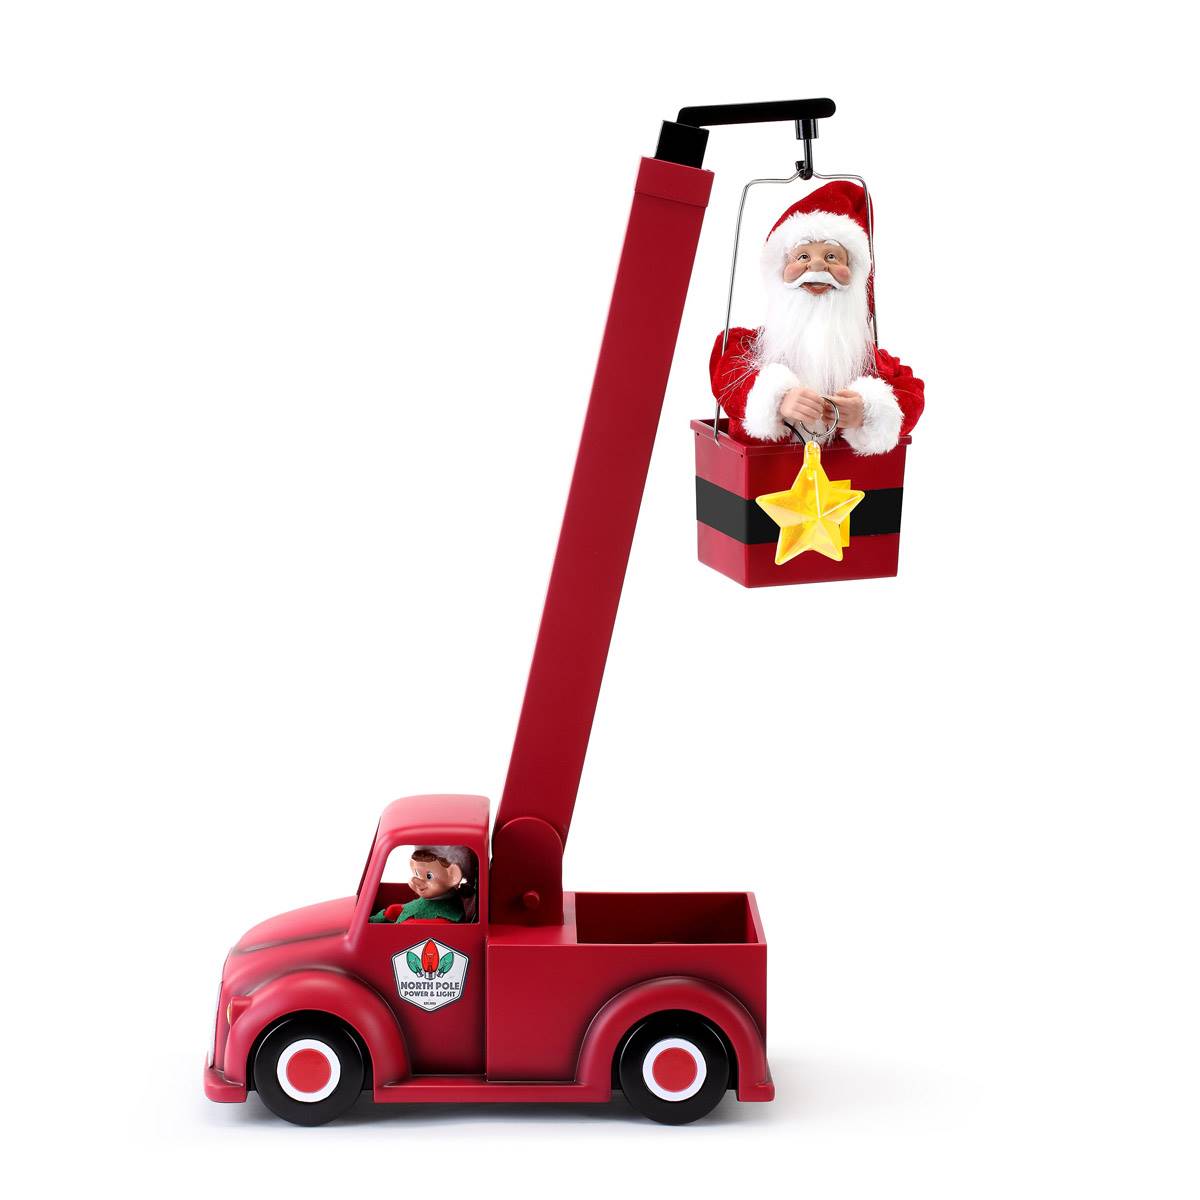 Mr. Christmas Animated Santa S Cherry Picker